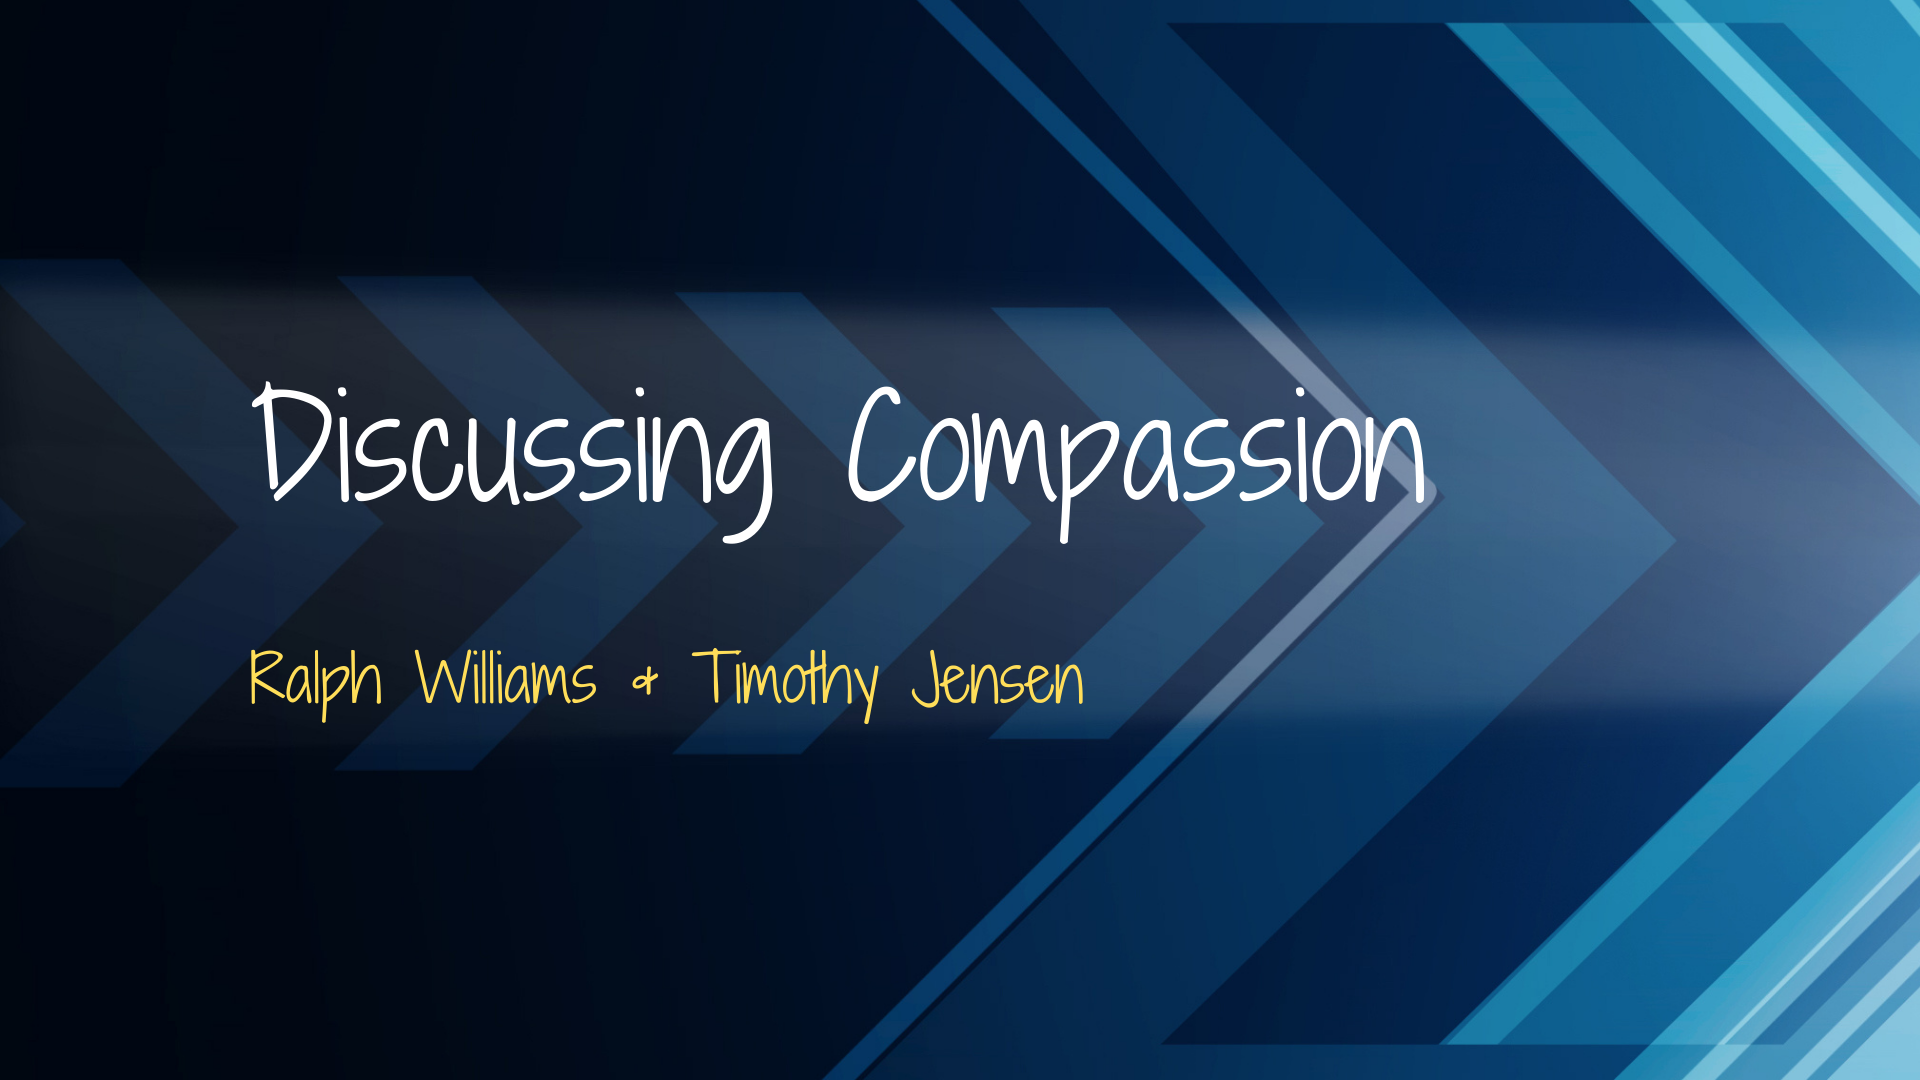 Discussing Compassion